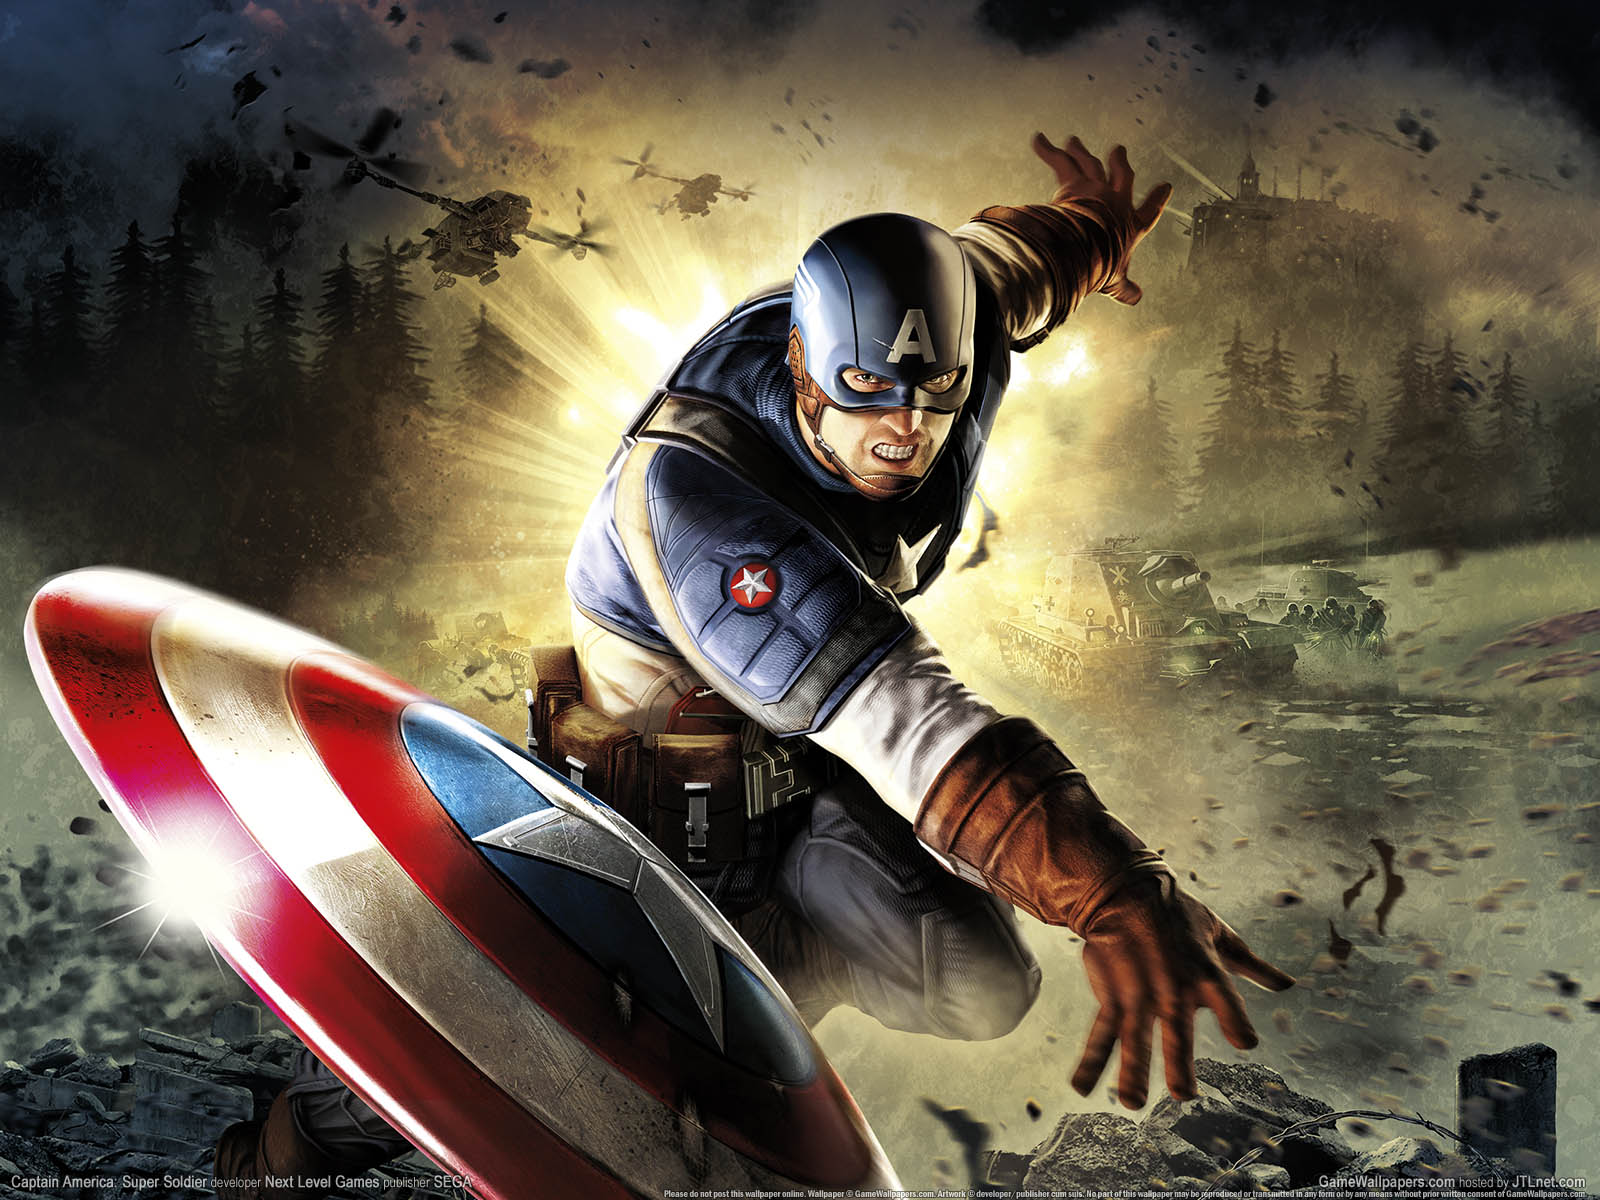 Captain America%3A Super Soldier fond d'cran 01 1600x1200